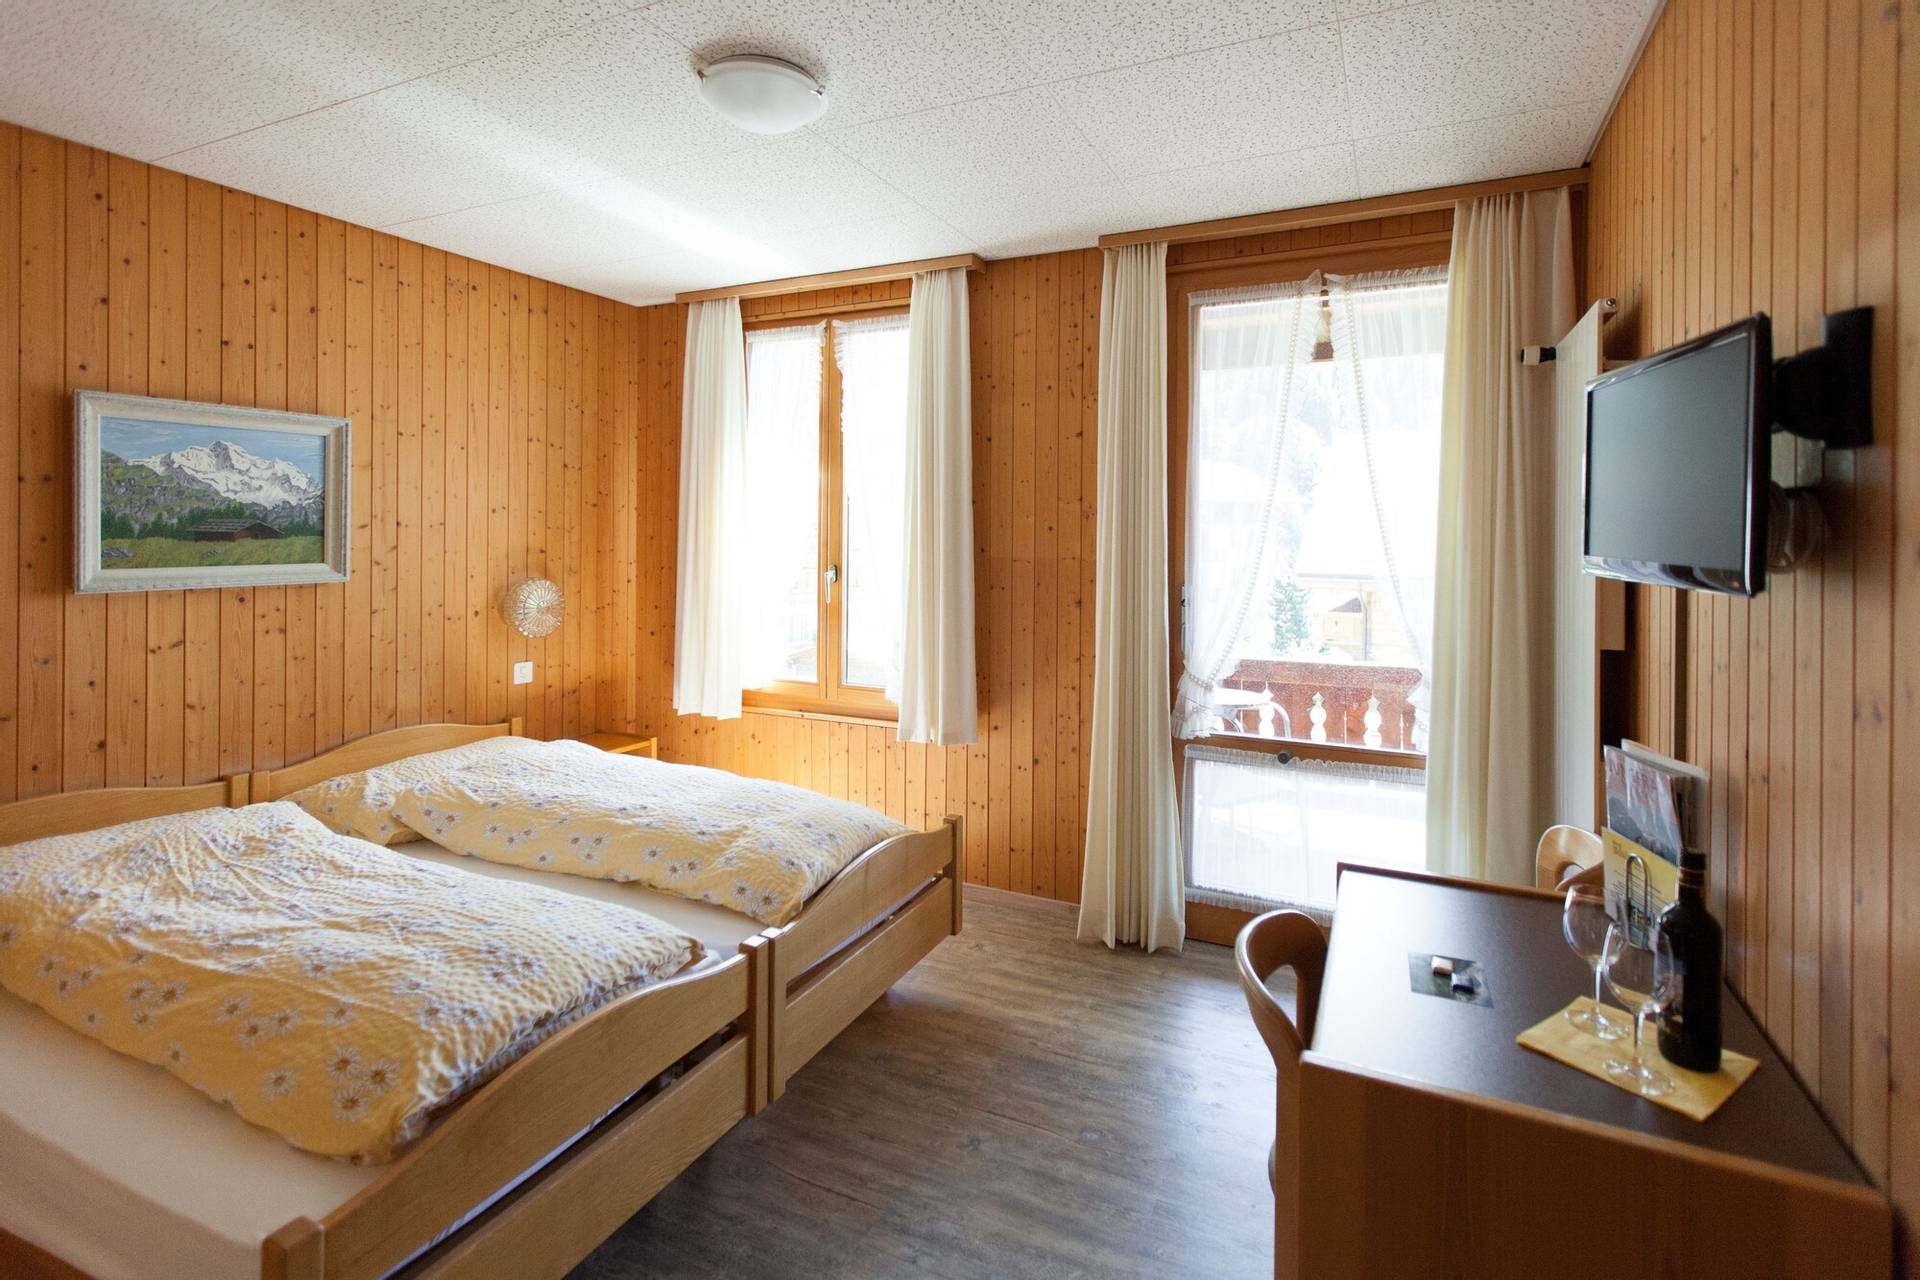 Bedroom 3, Hotel Edelweiss, Interlaken